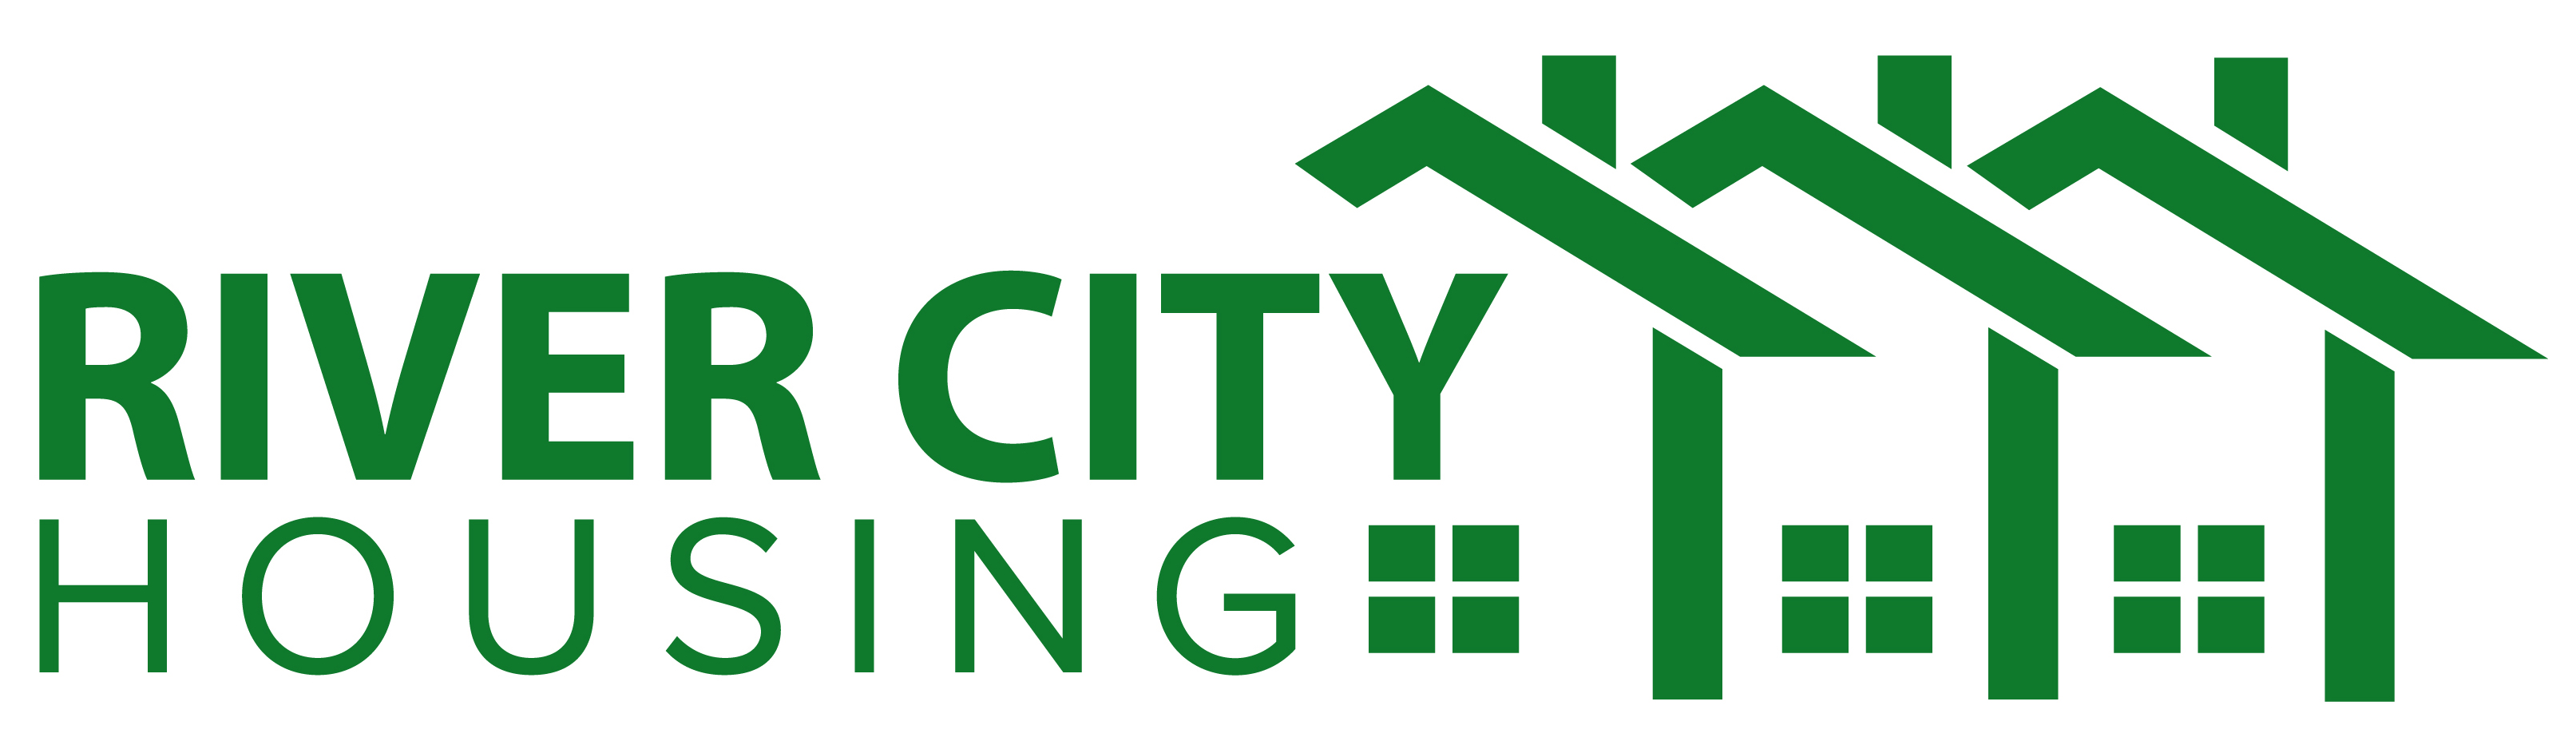 River City Housing logo